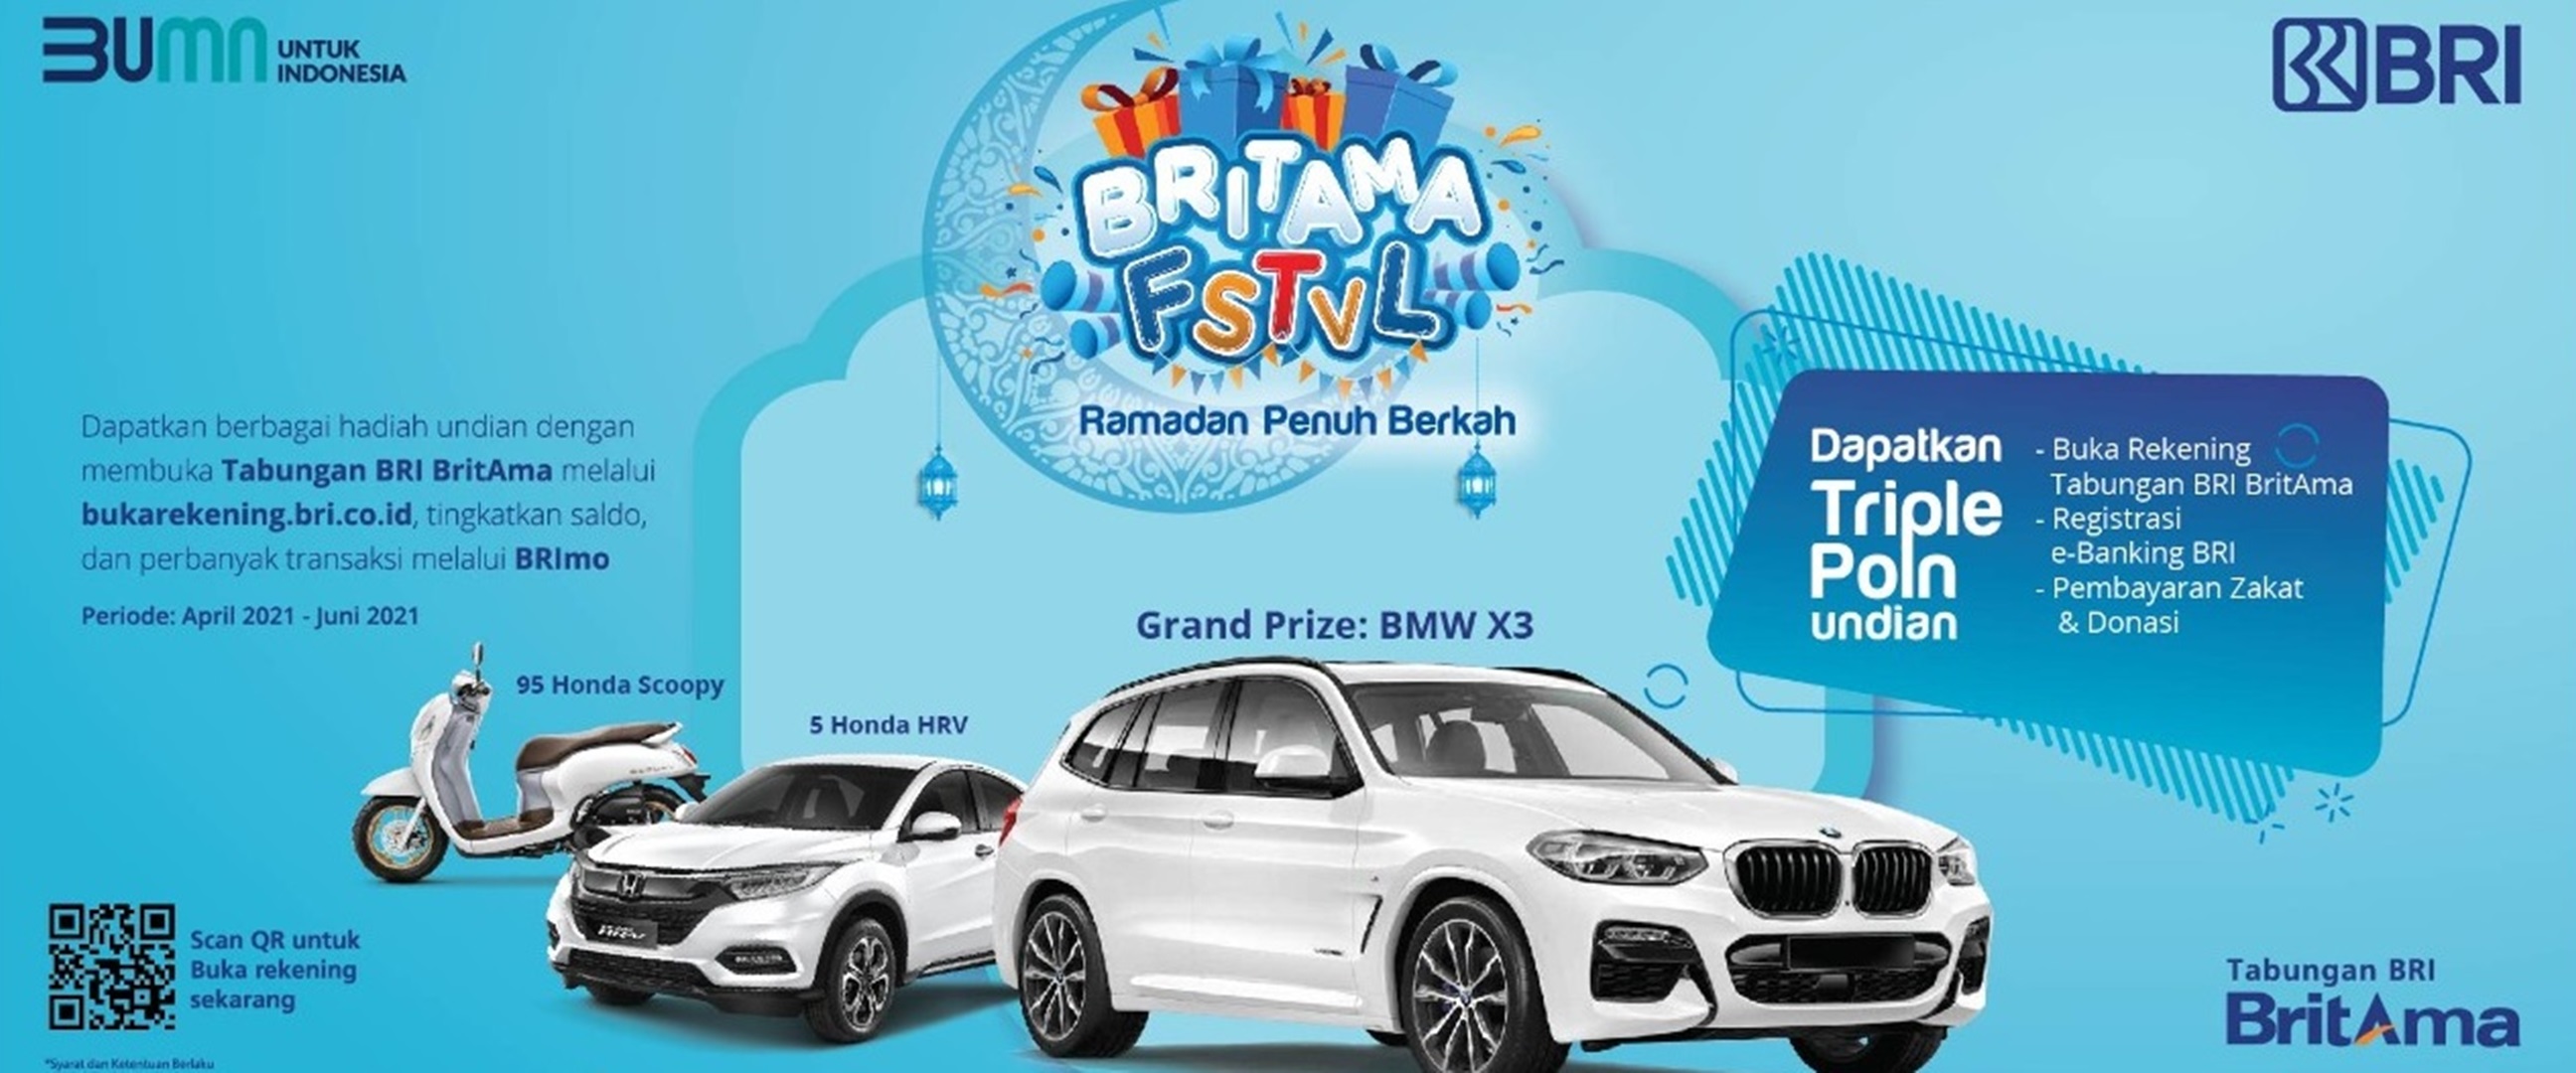 BritAma FSTVL "Ramadan Penuh Berkah" kembali hadir, undi mobil BMW